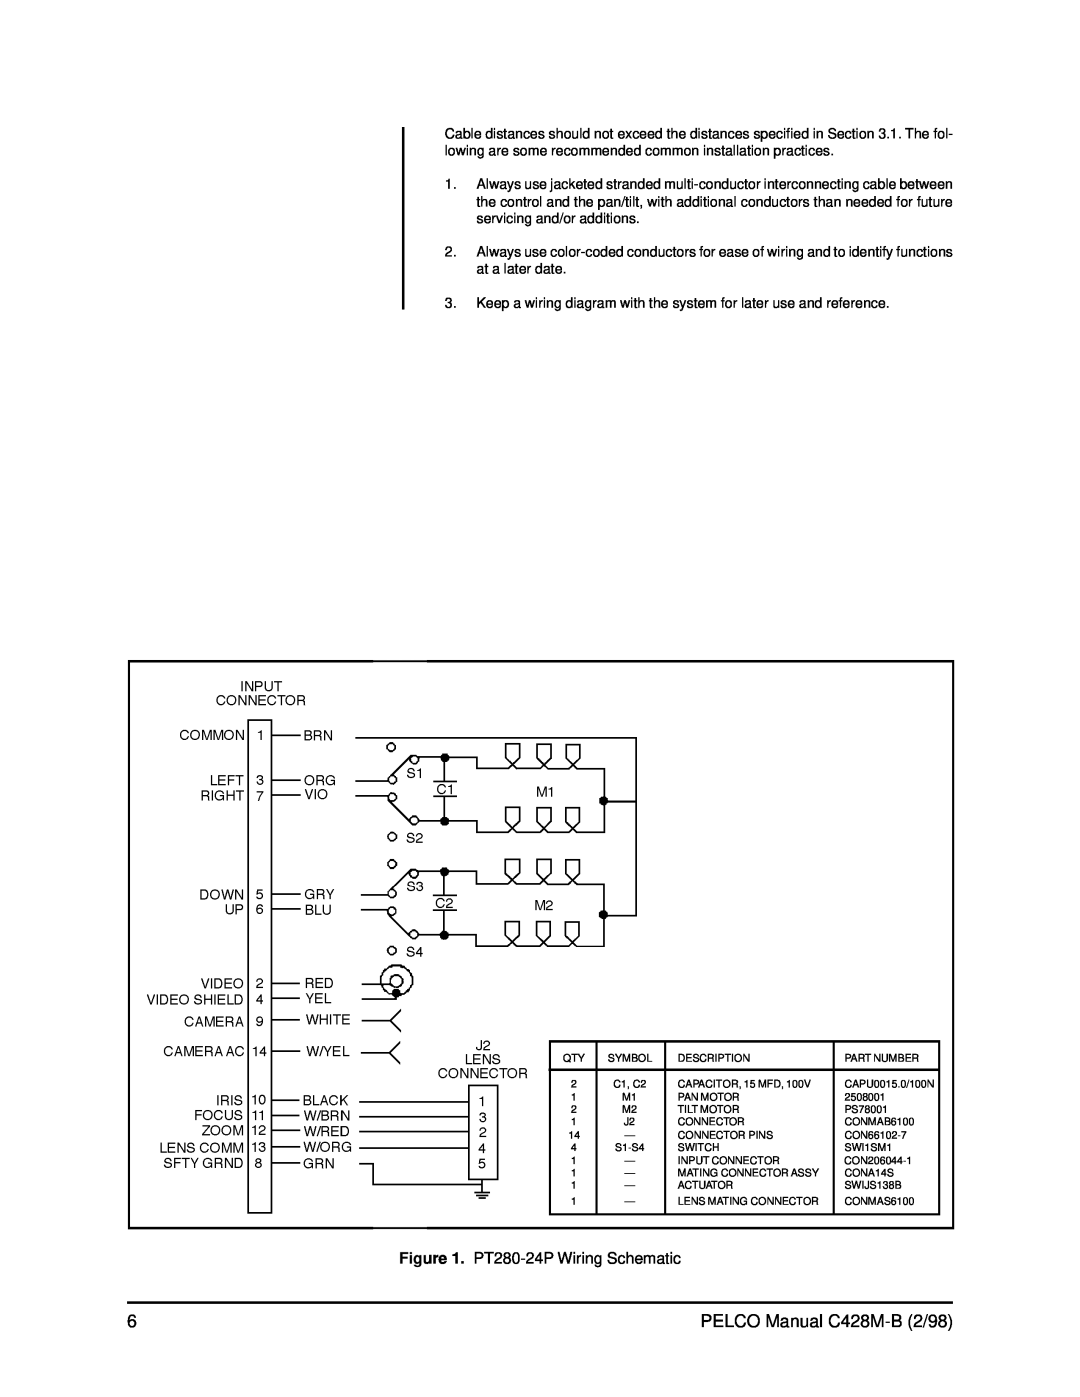 Pelco SS3002 operation manual PELCO Manual C428M-B2/98, PT280-24PWiring Schematic 